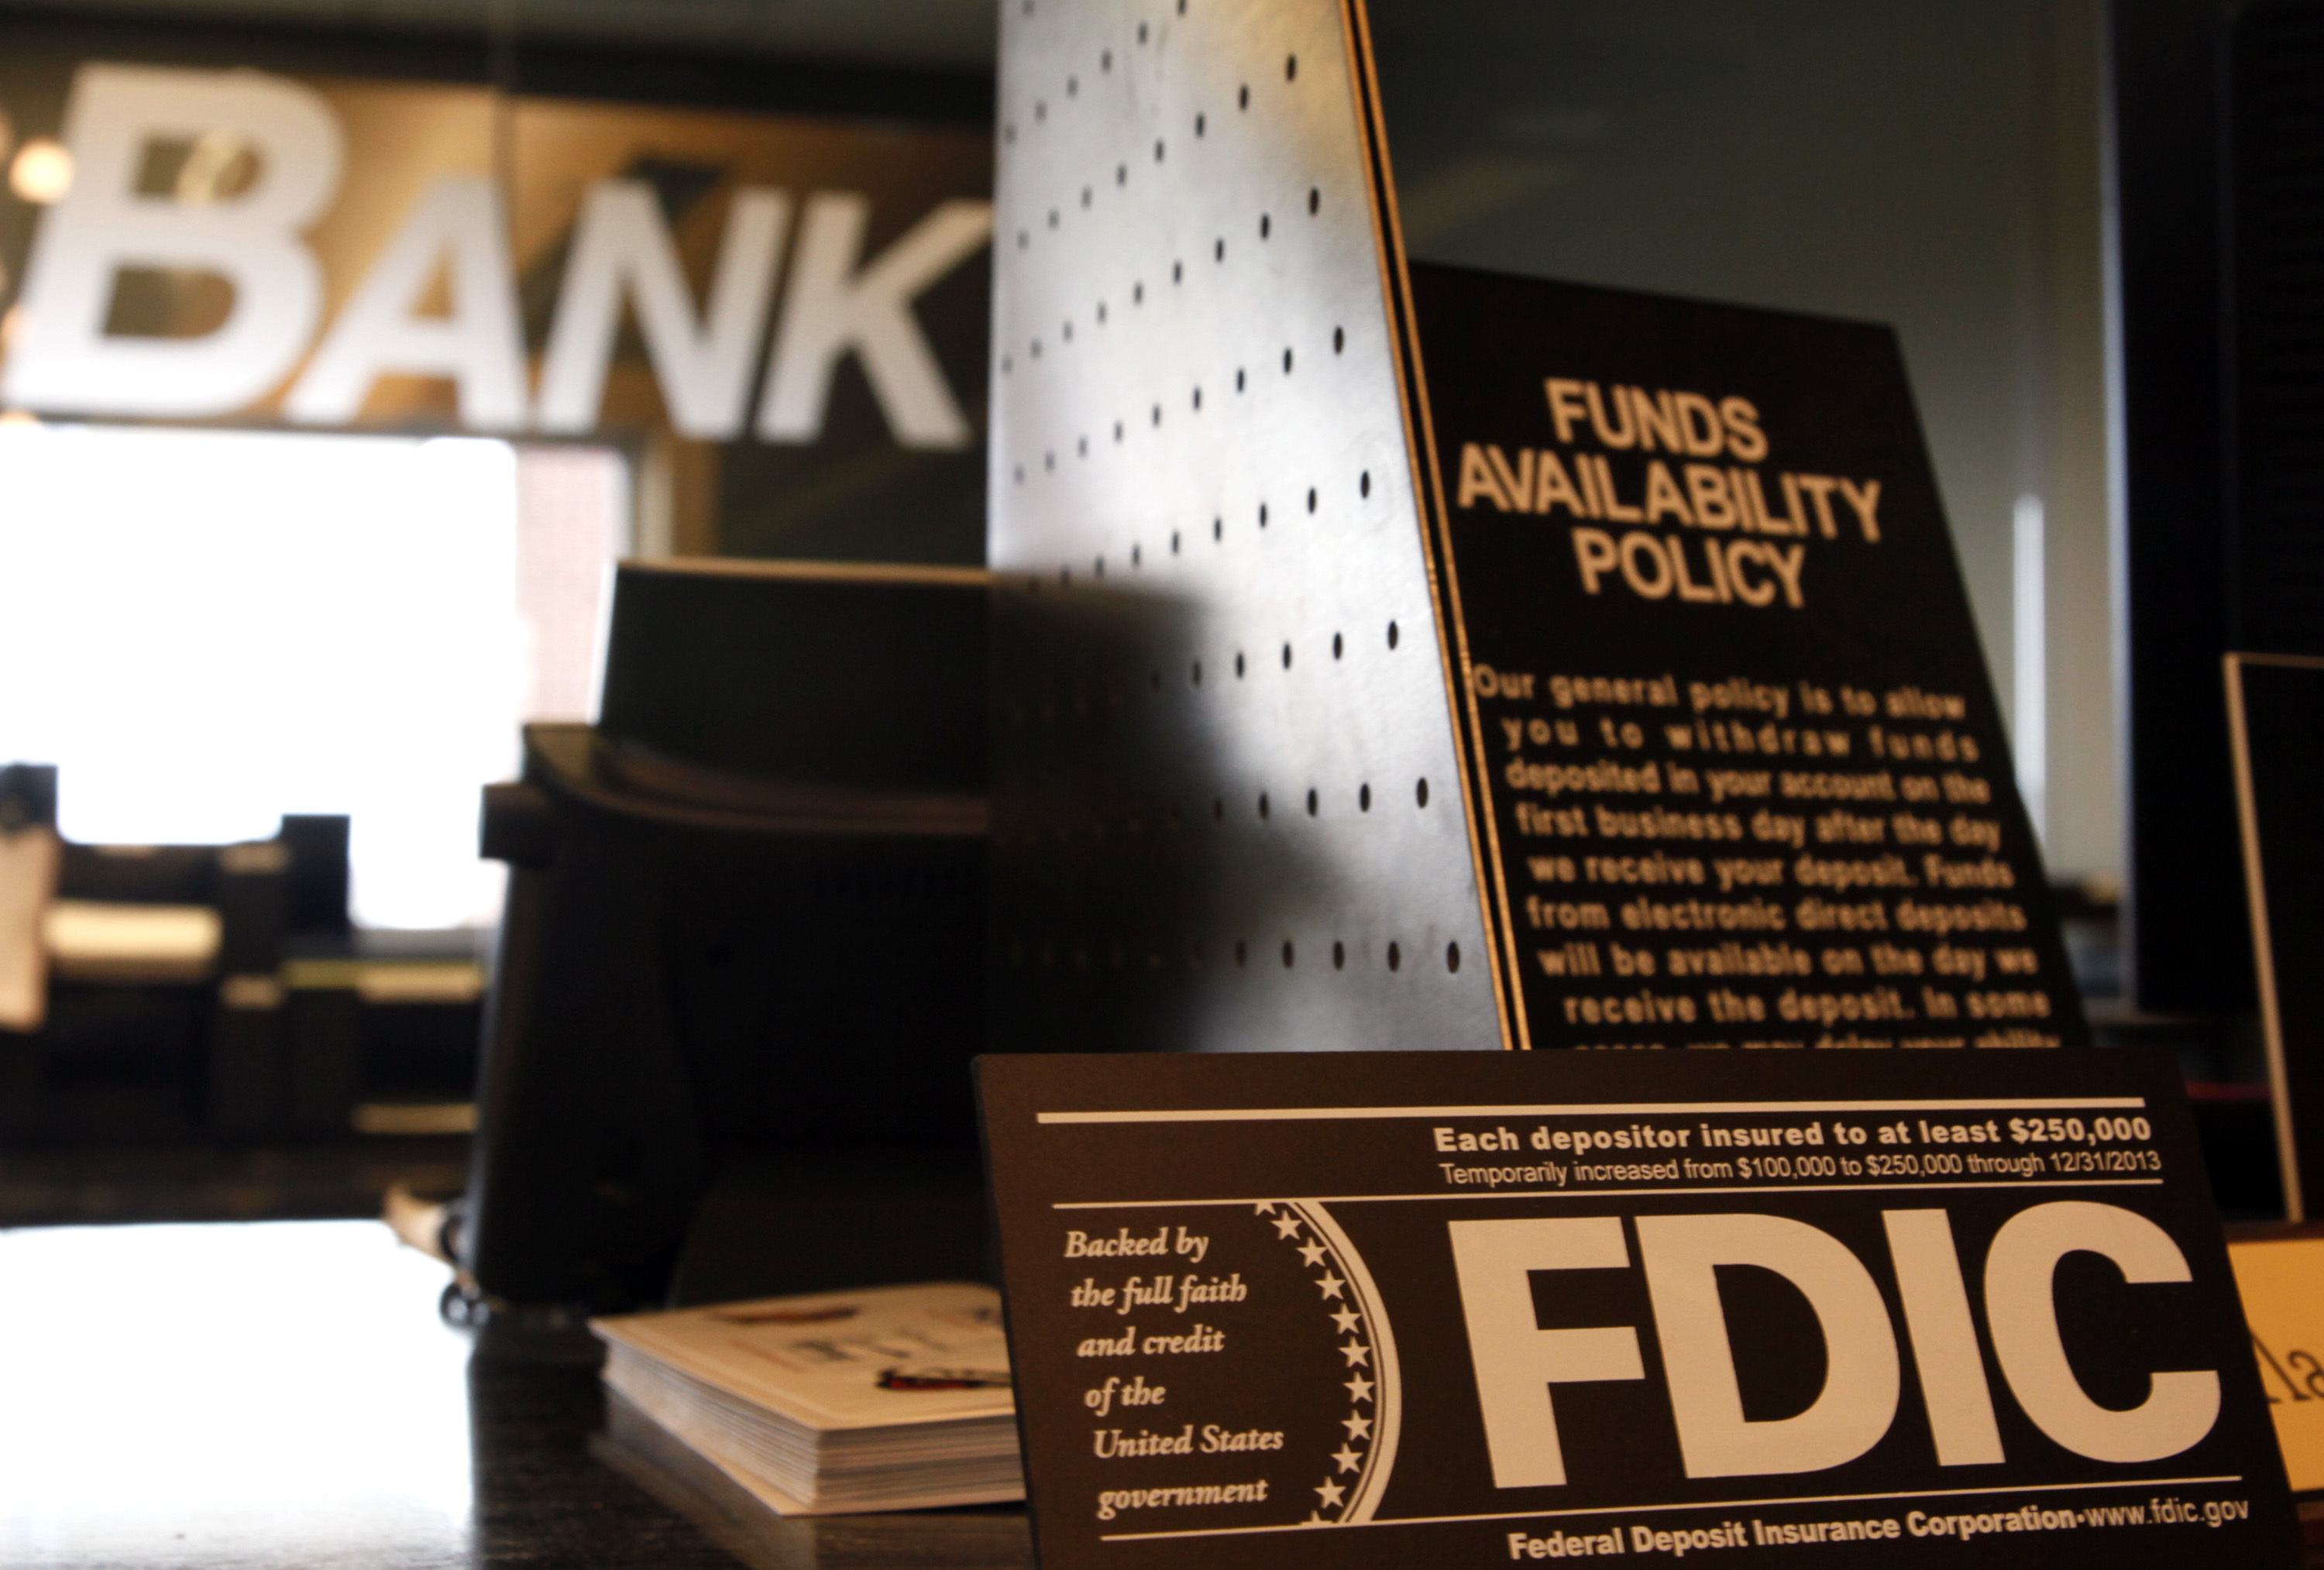 U.S. bank regulators considering tougher rules for banks over 100 bln